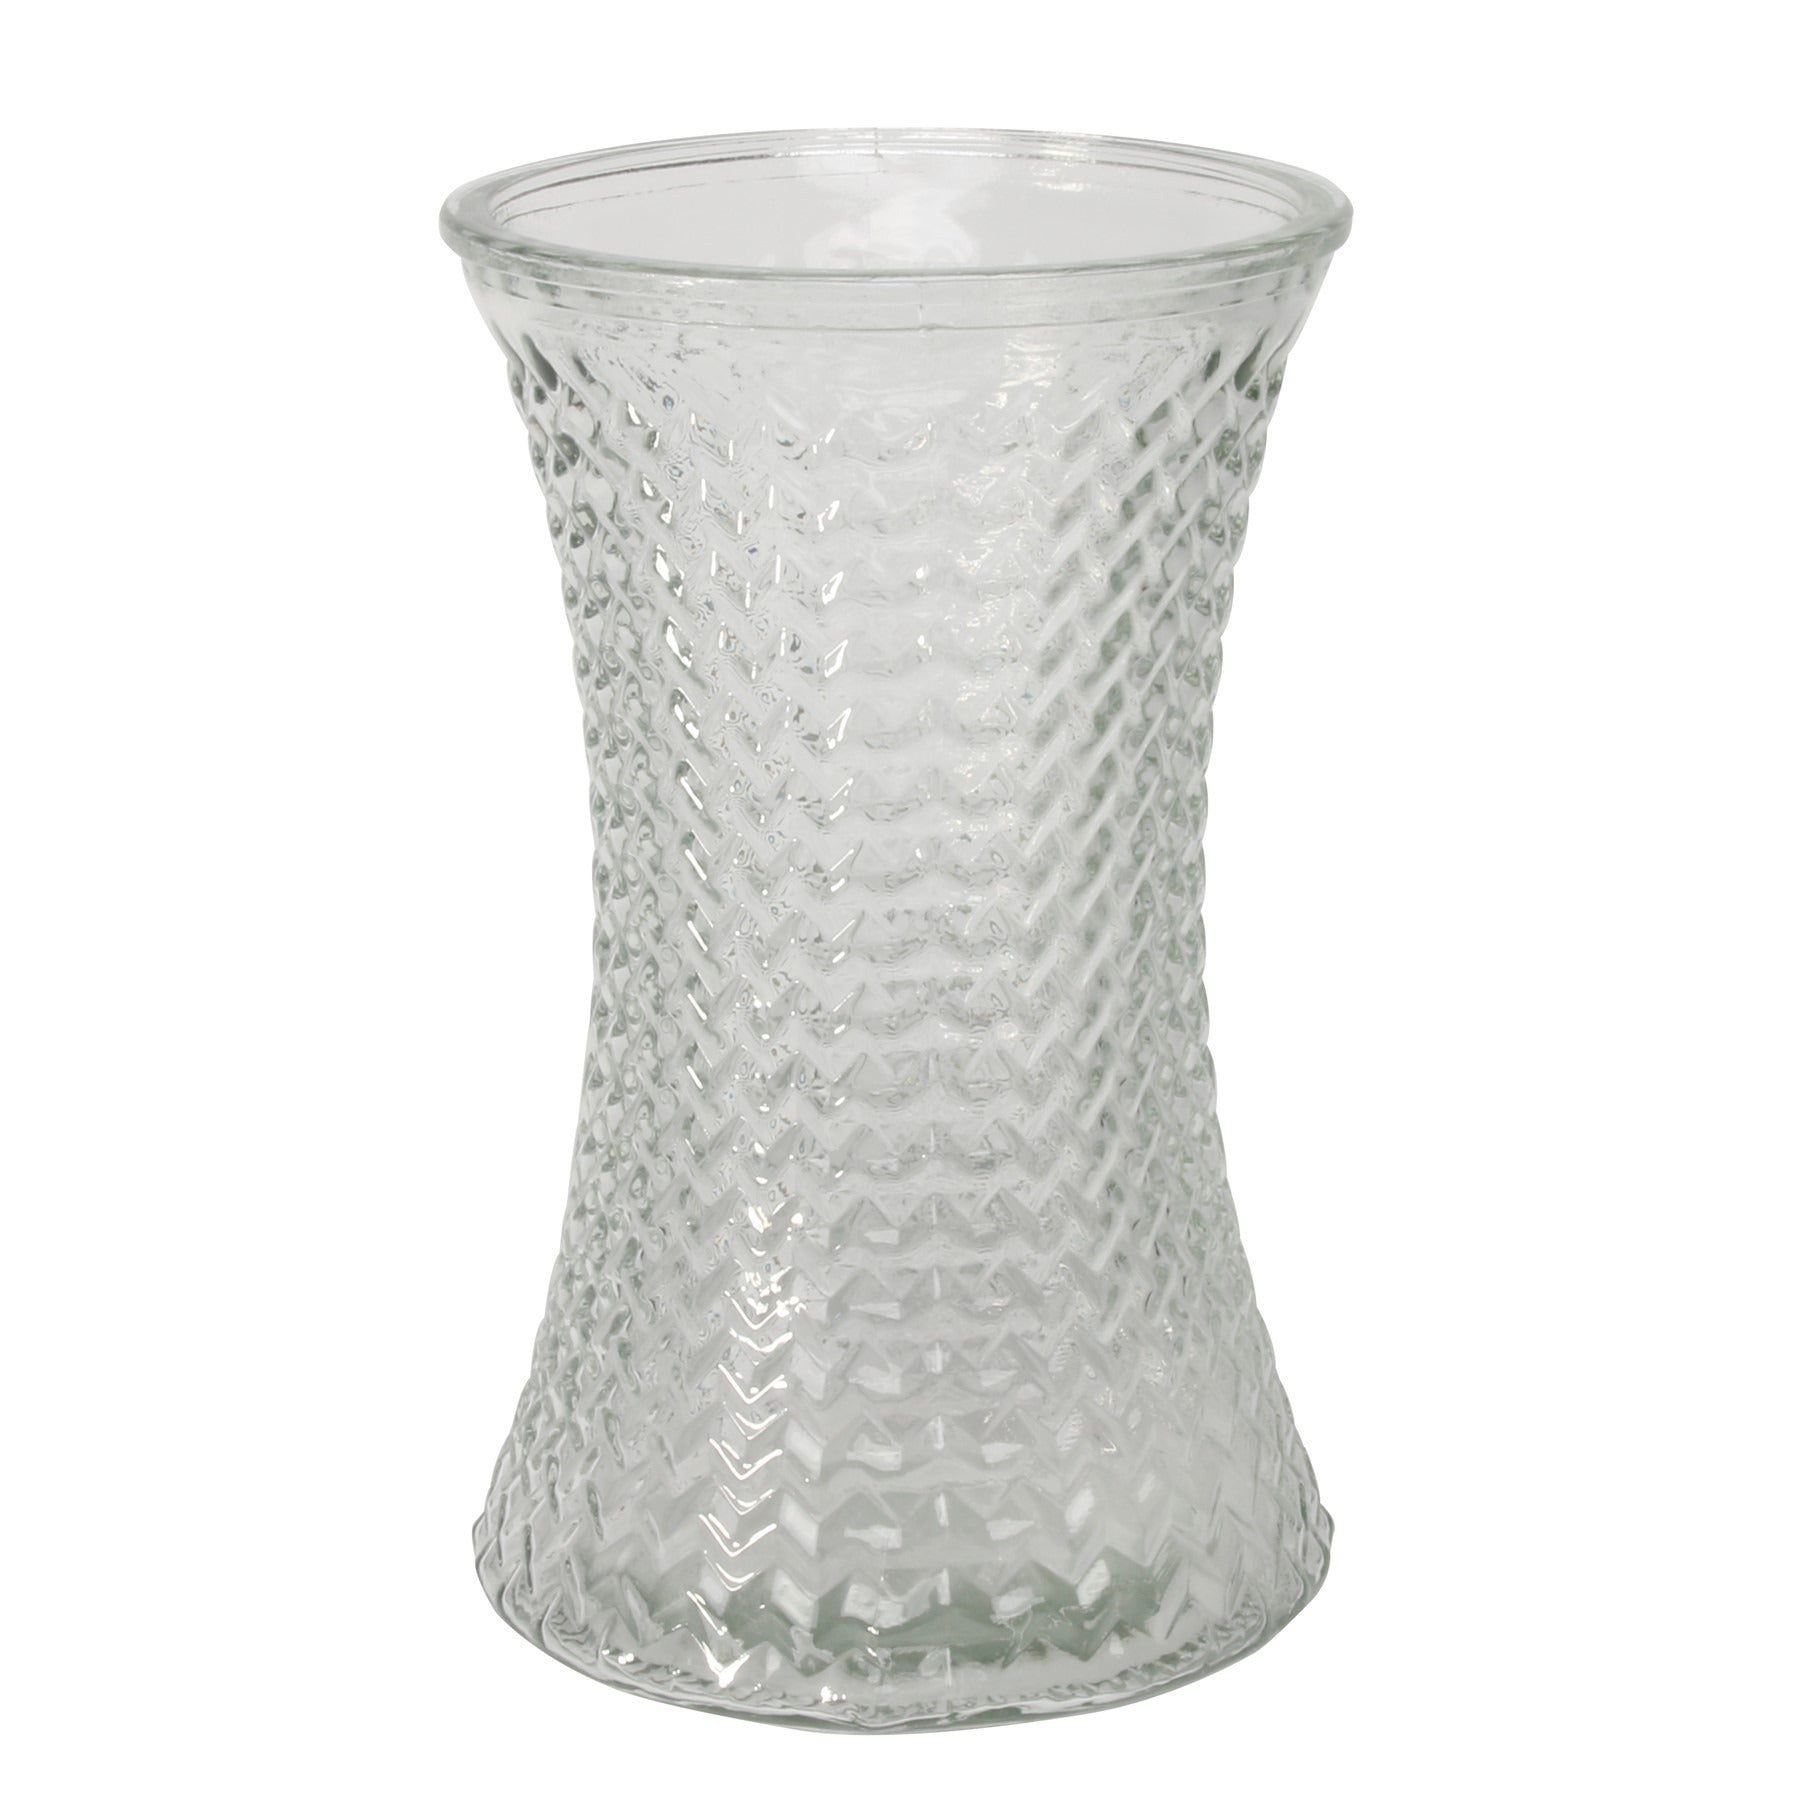 View Geometric HandTied Vase 198cm x 125cm information